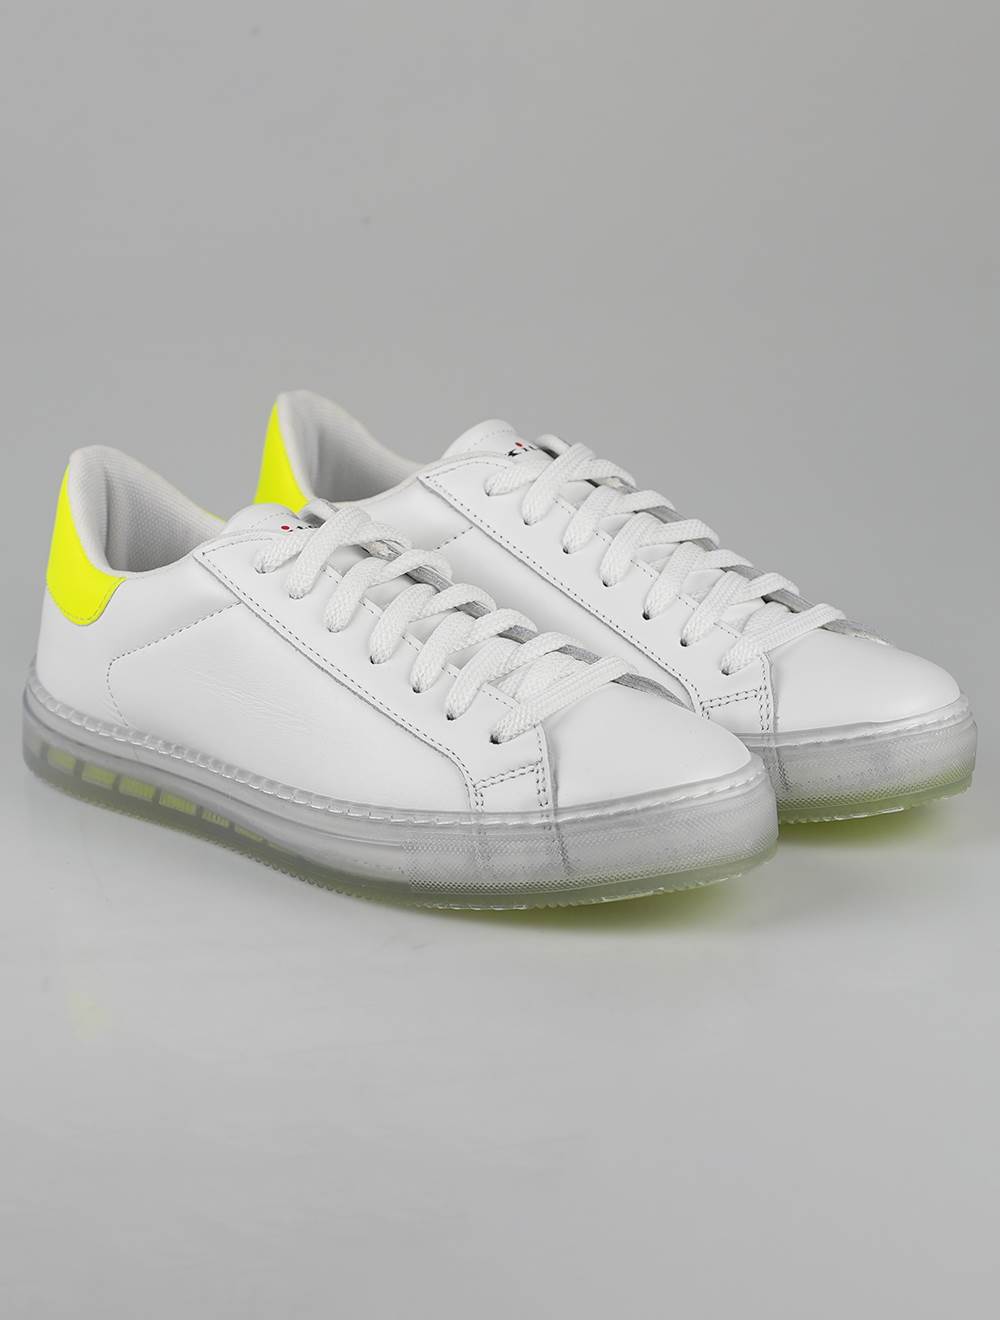 Kiton Hvid gul læder Sneakers Specialudgaver